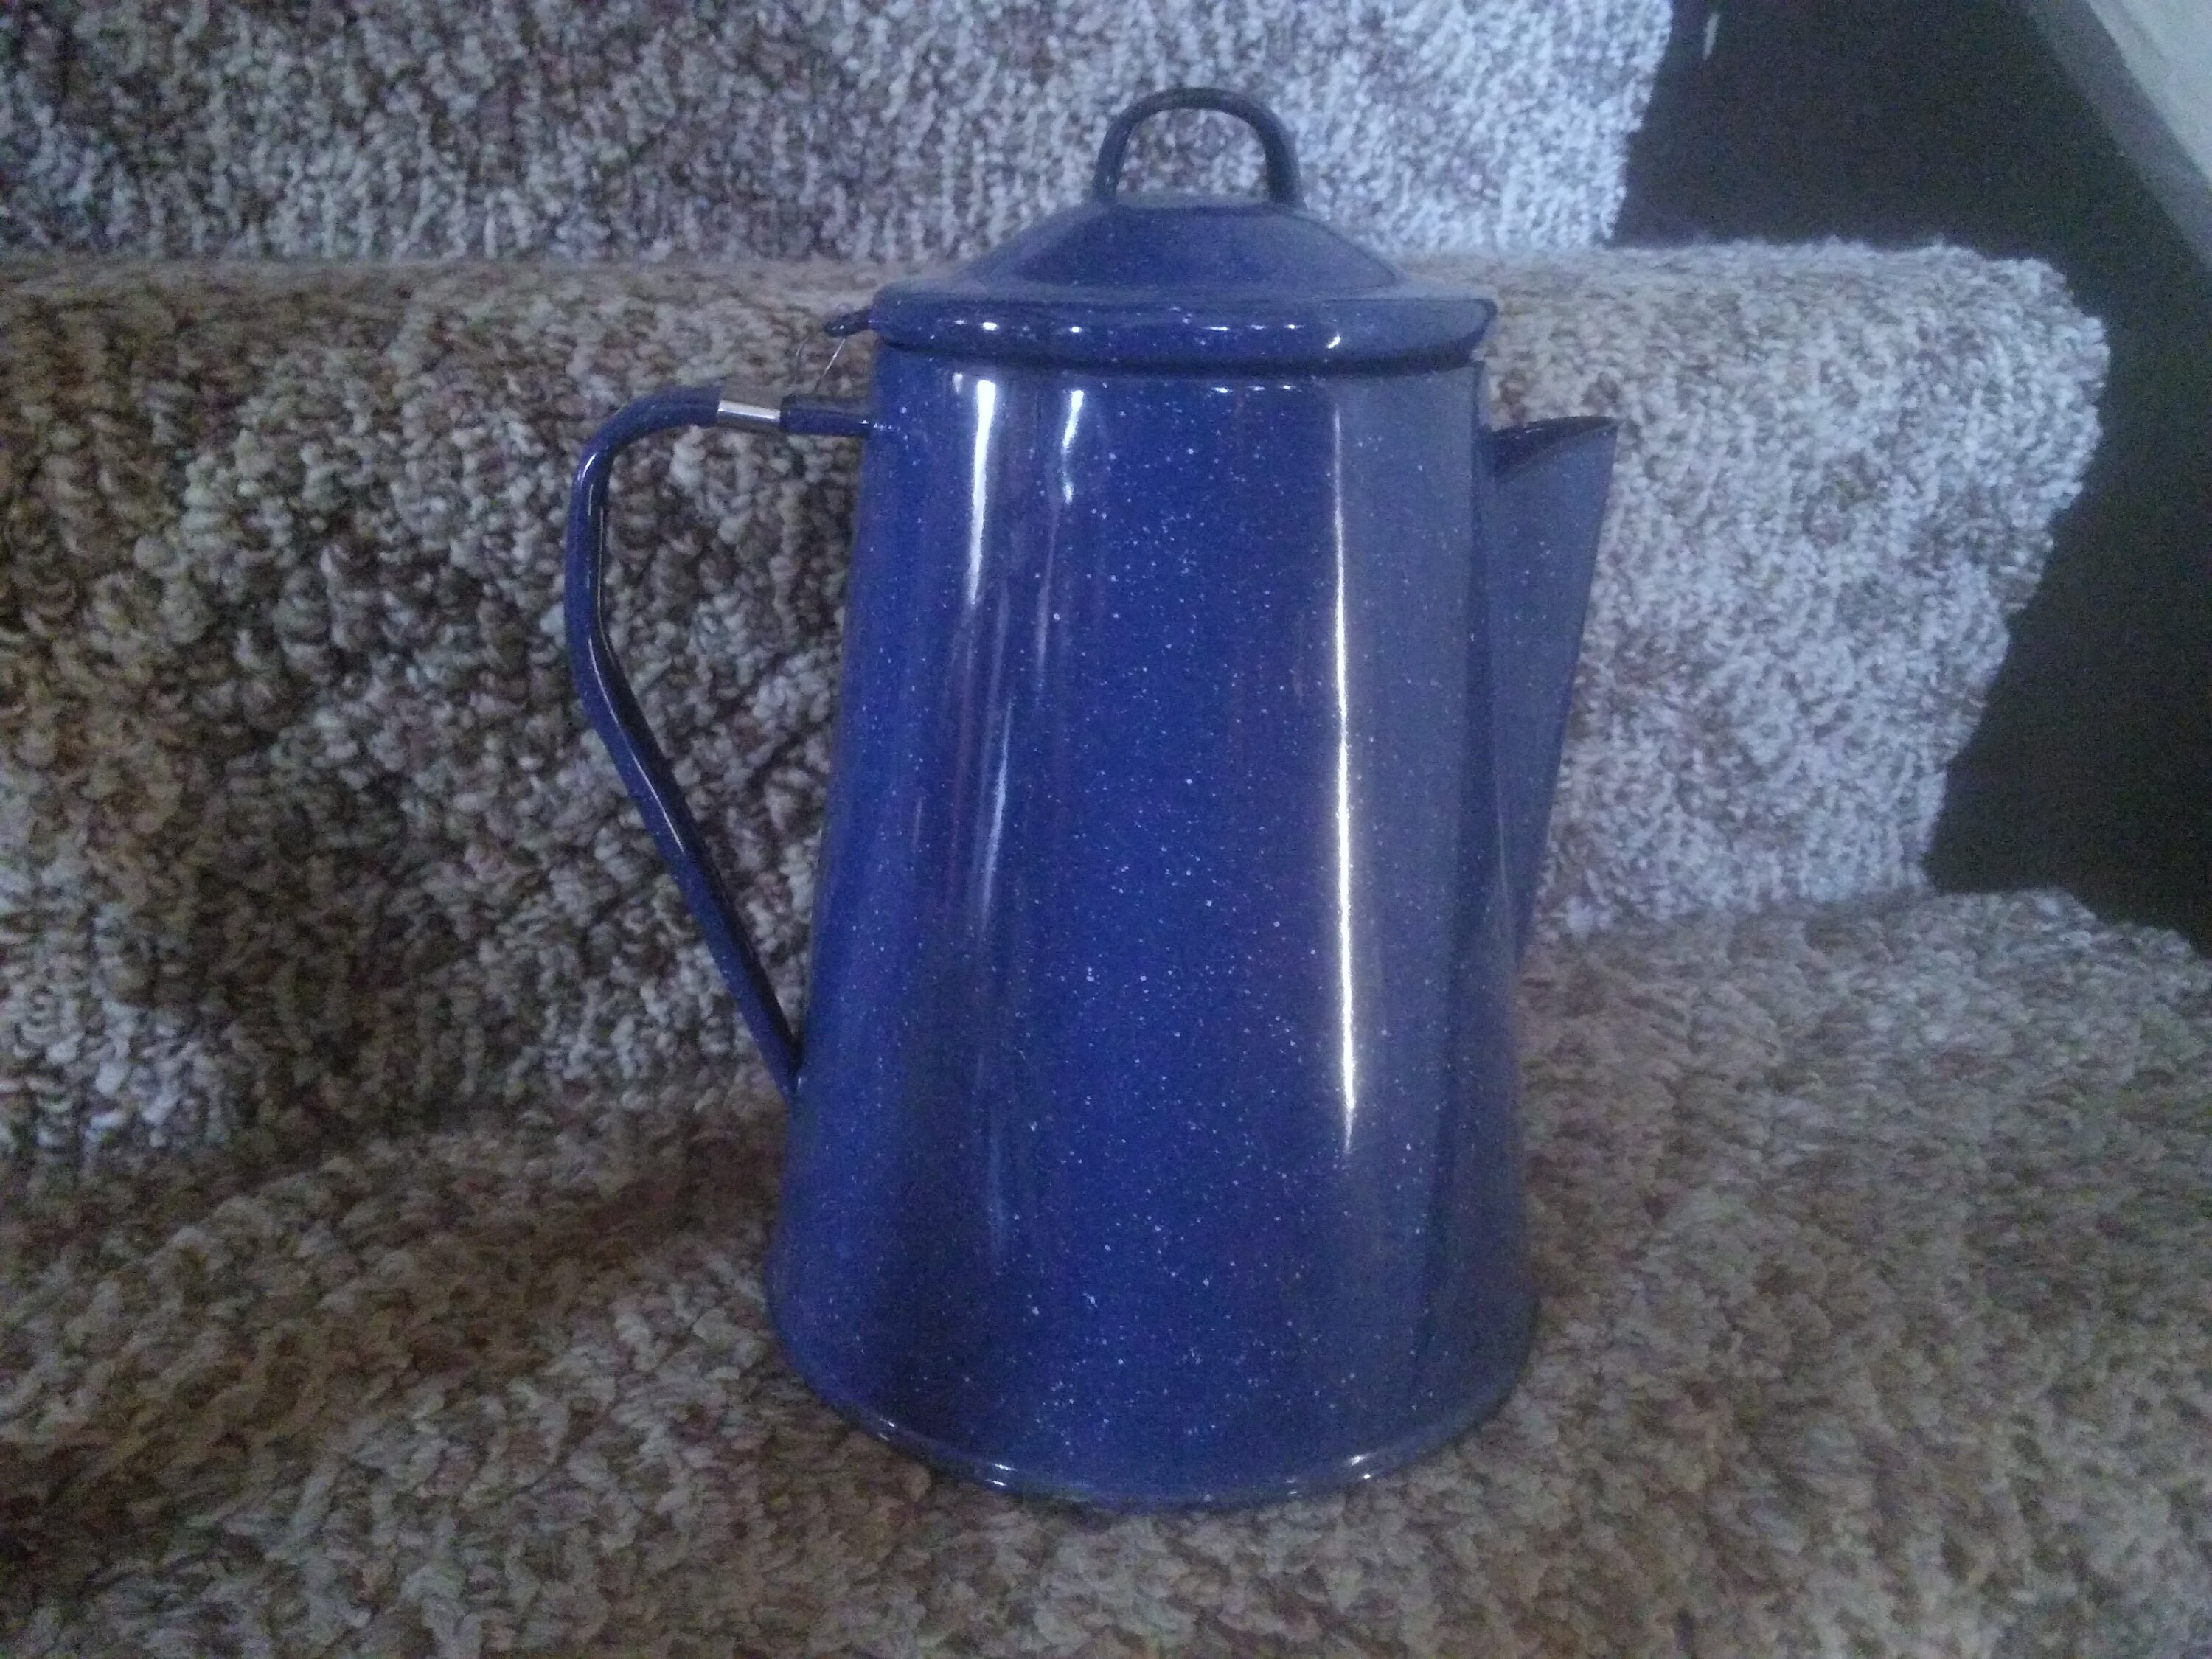 Classic Blue Percolator Enamelware Camping Coffee Pot - 12 Cup